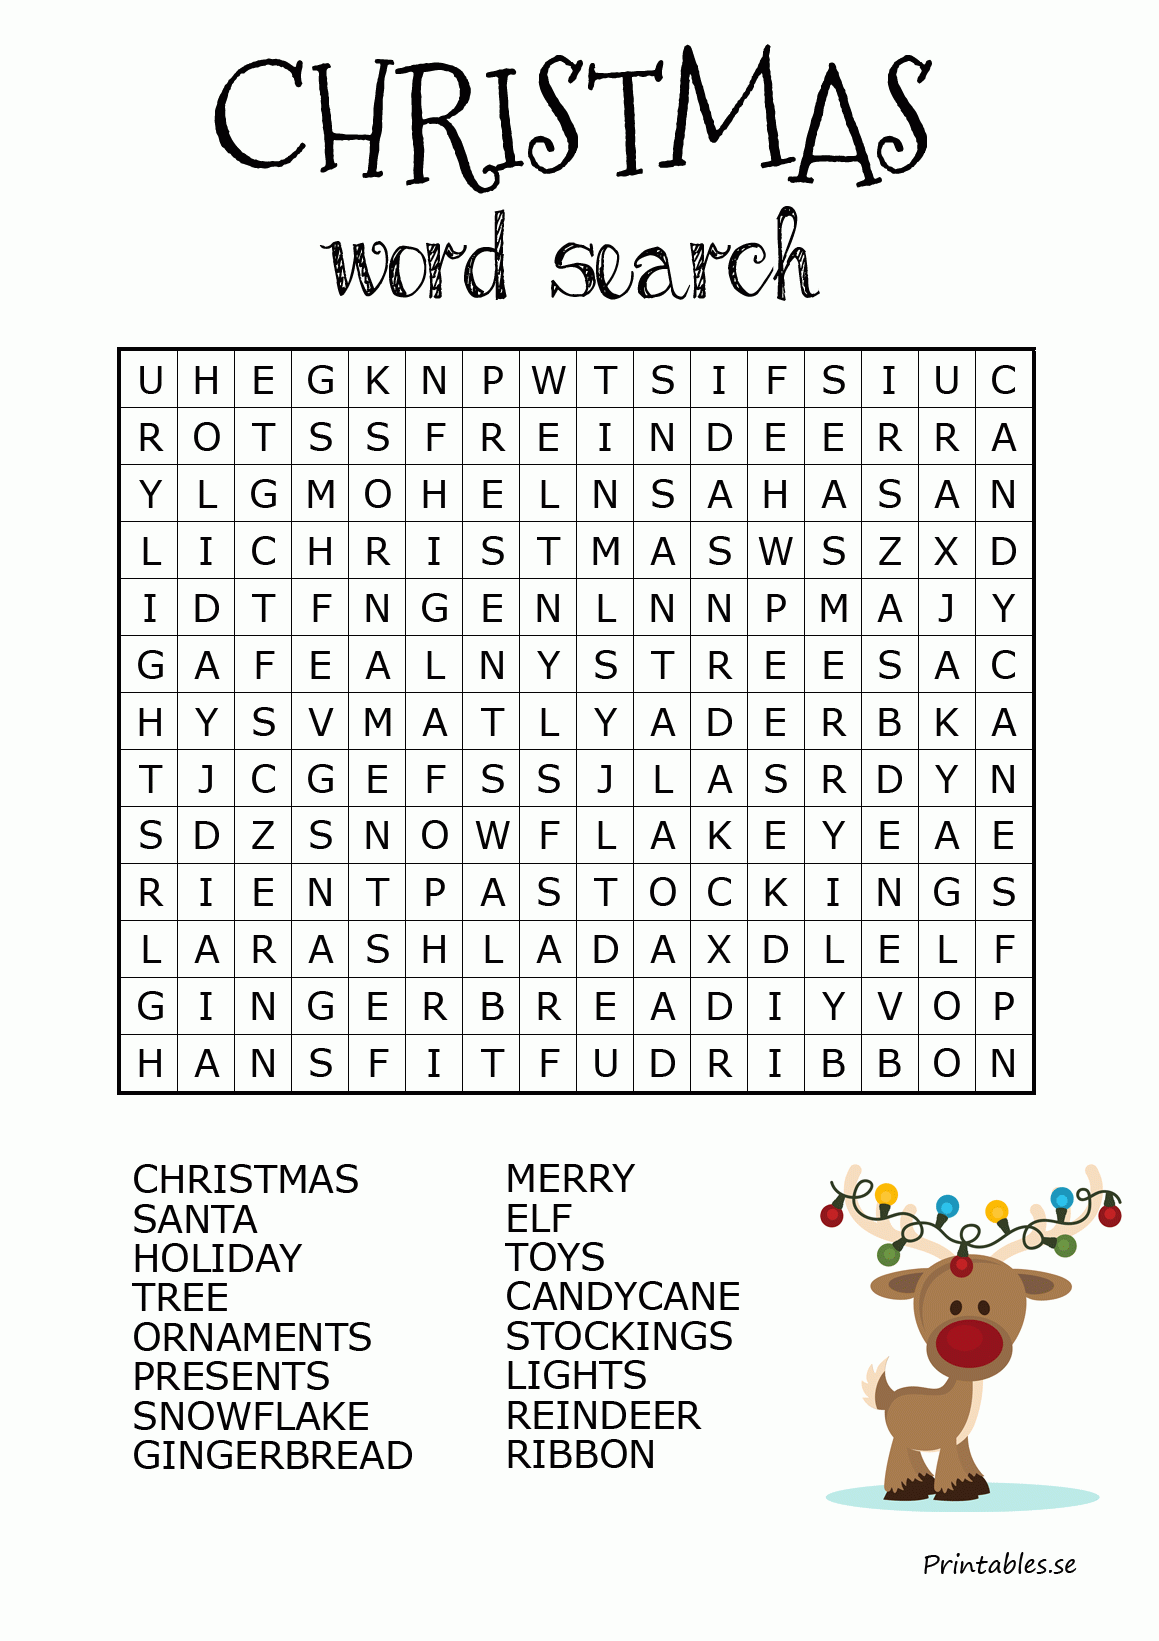 Christmas Word Search Printable Puzzles | FreePrintableTM.com